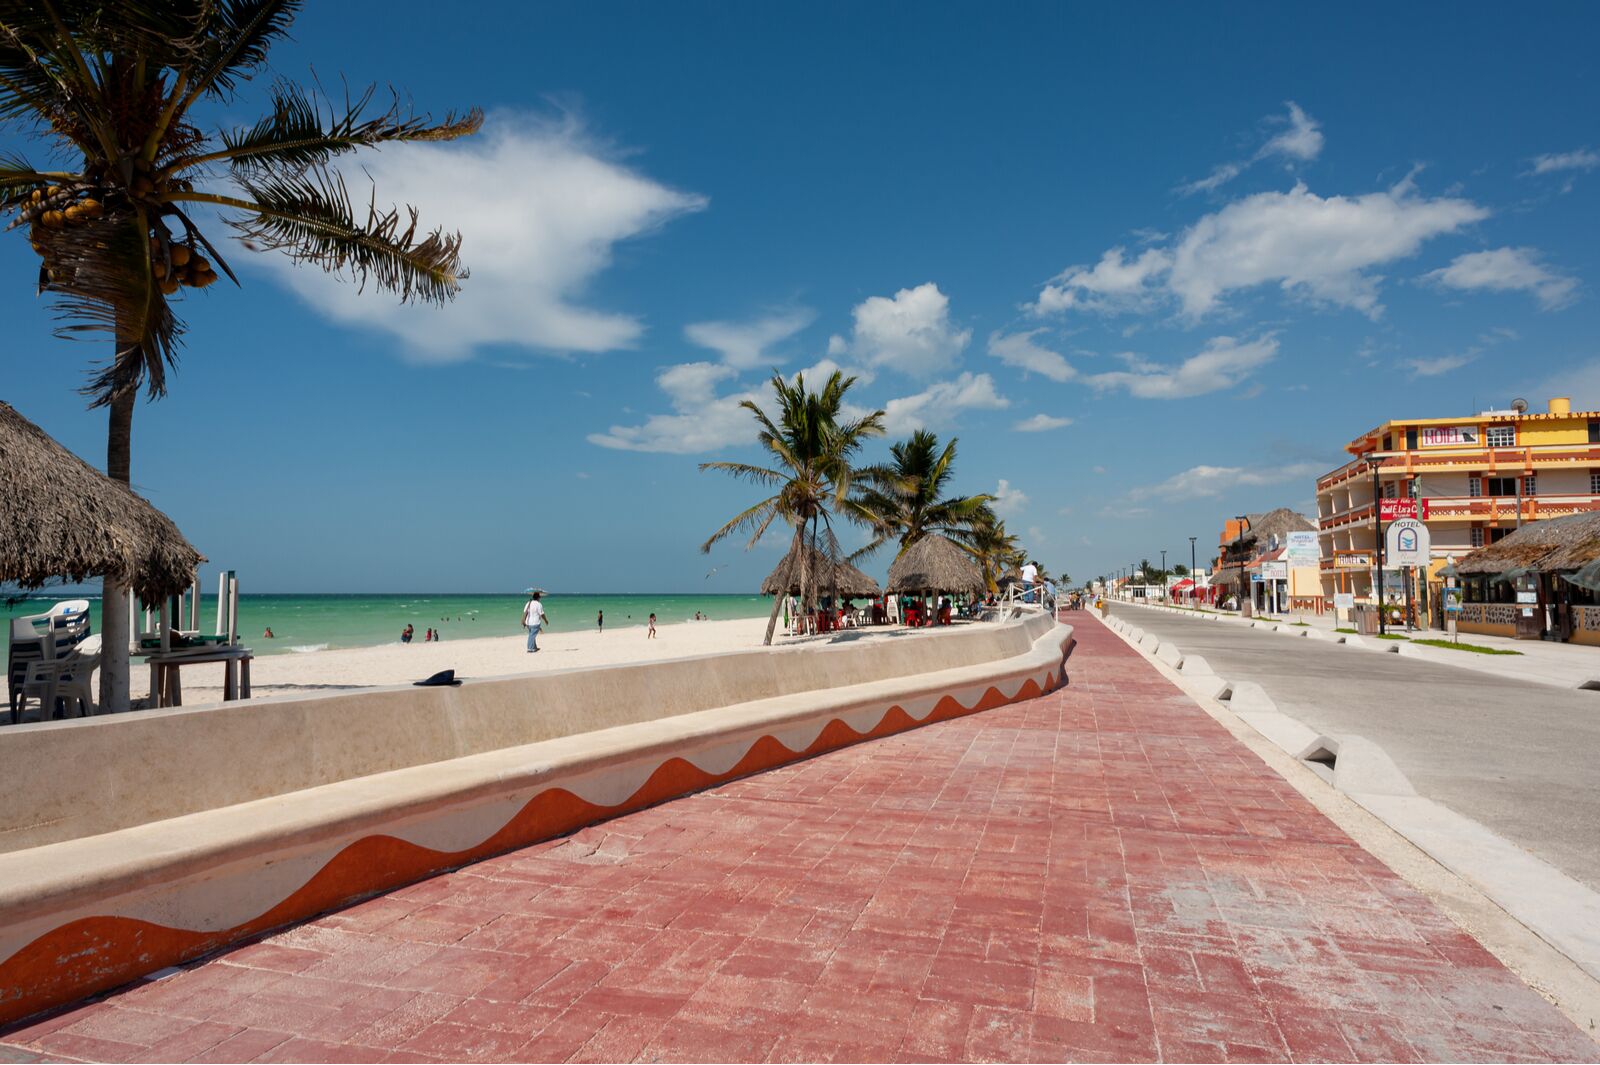 Puerto Progreso, Yucatán/Mexico - one of the best merida, mexico beaches within a short drive